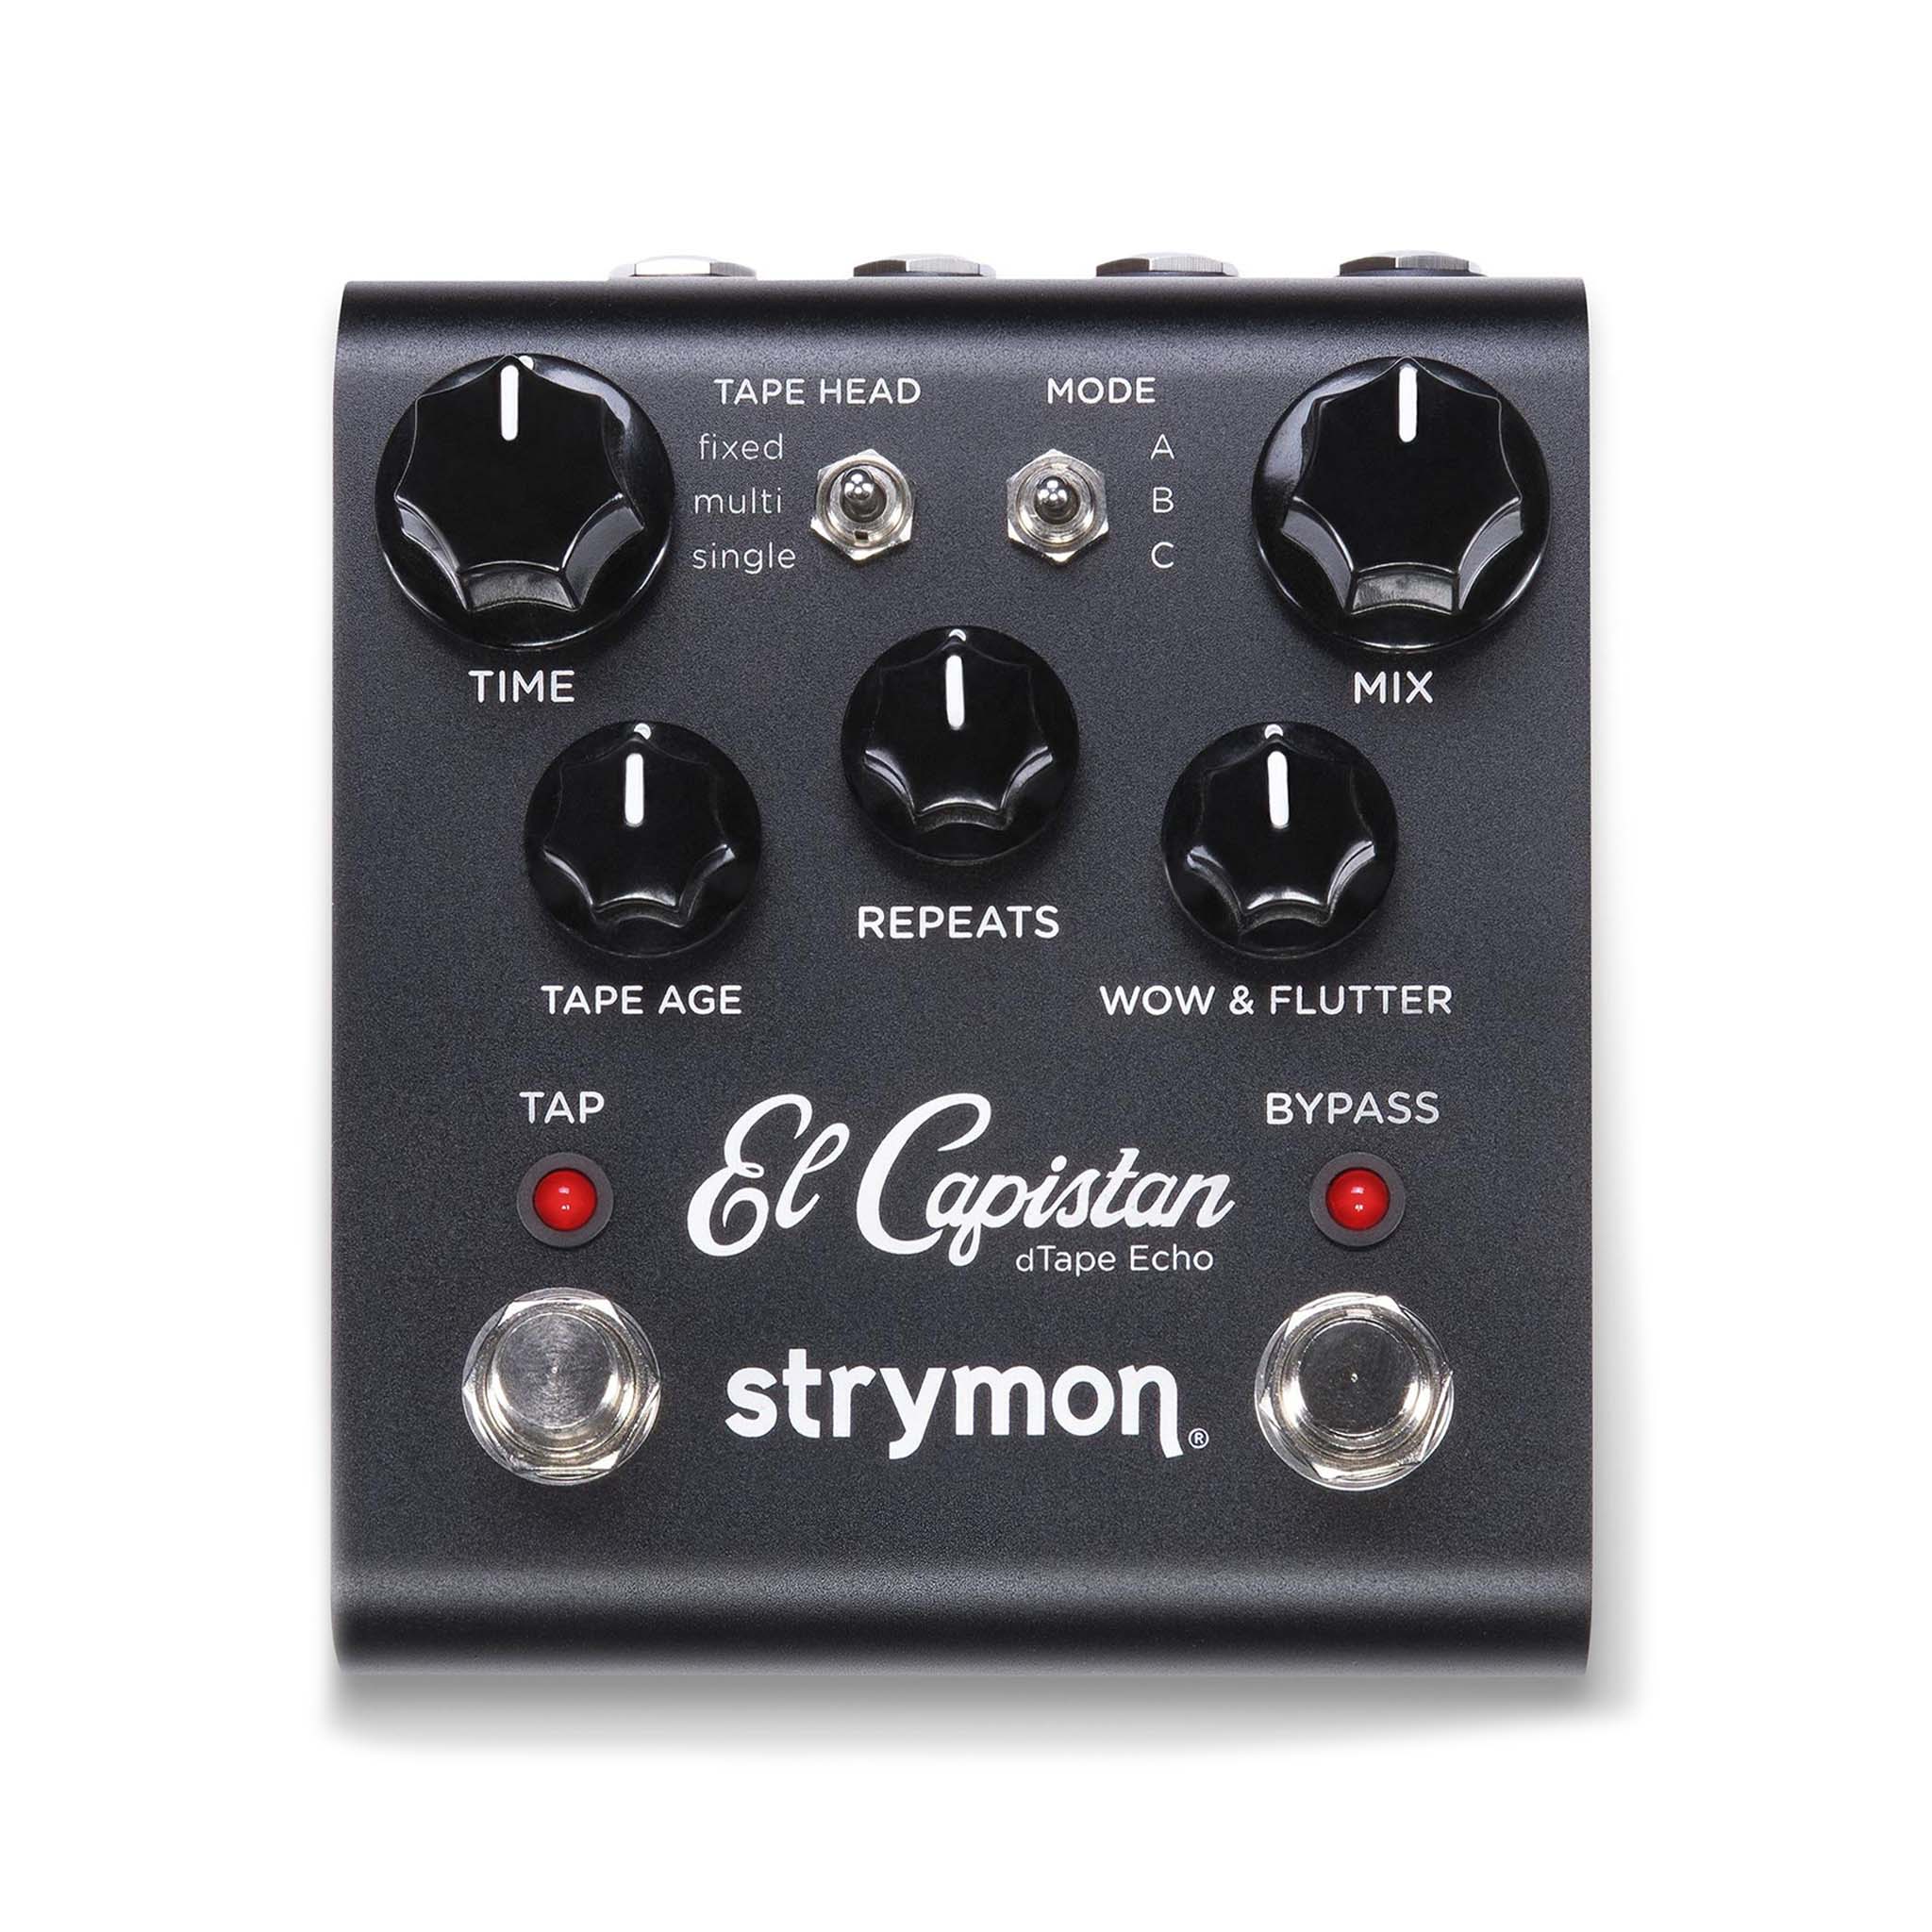 Strymon El Capistan dTape Echo Guitar Effects Pedal, Midnight Edition Zoso Music